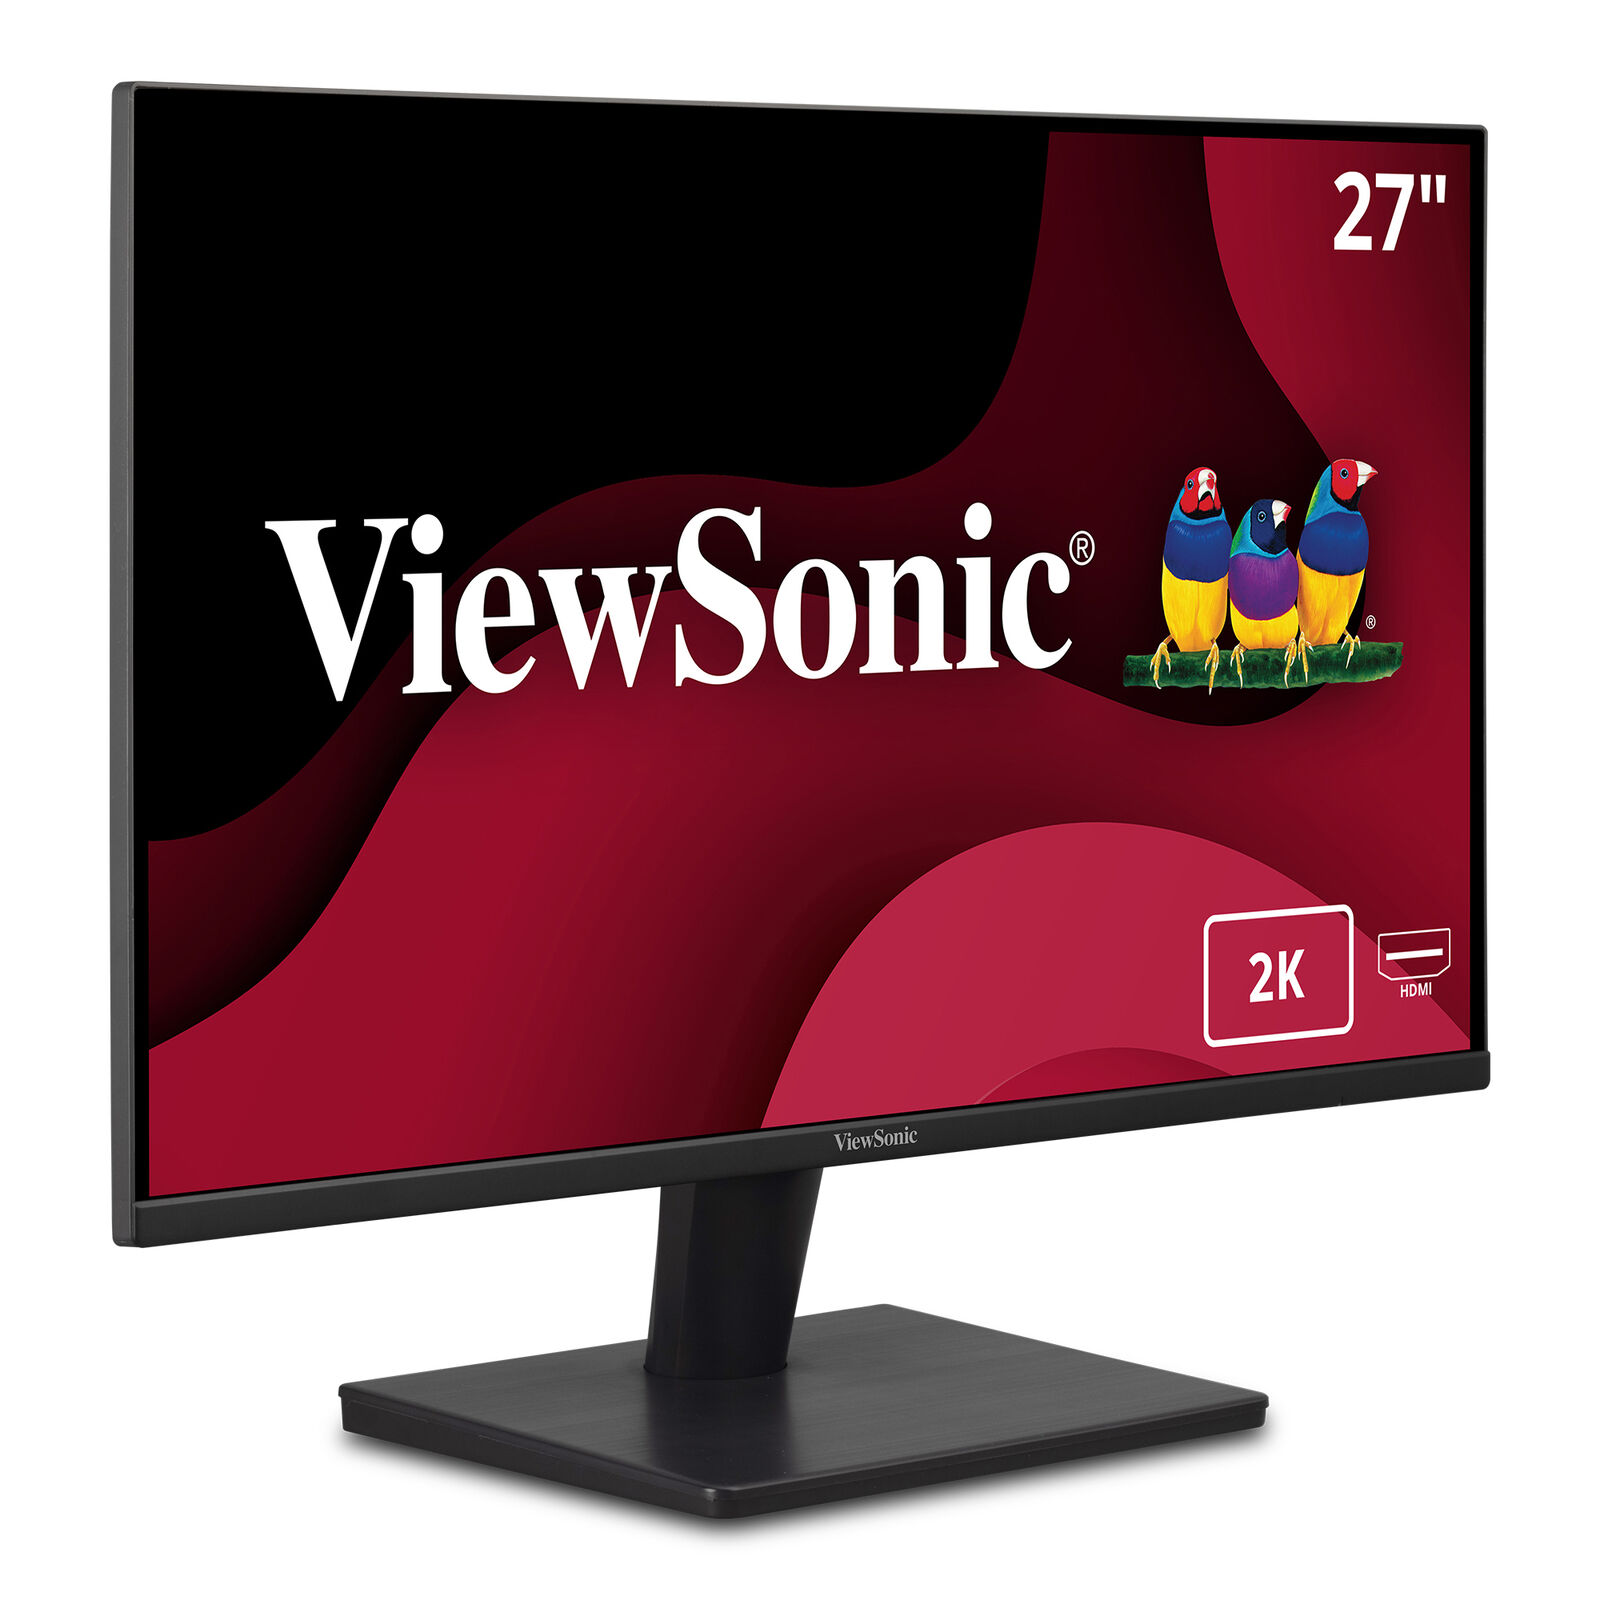 ViewSonic 1440P Adaptive Sync gaming monitor VA2715-2K-MHD 27-Inch